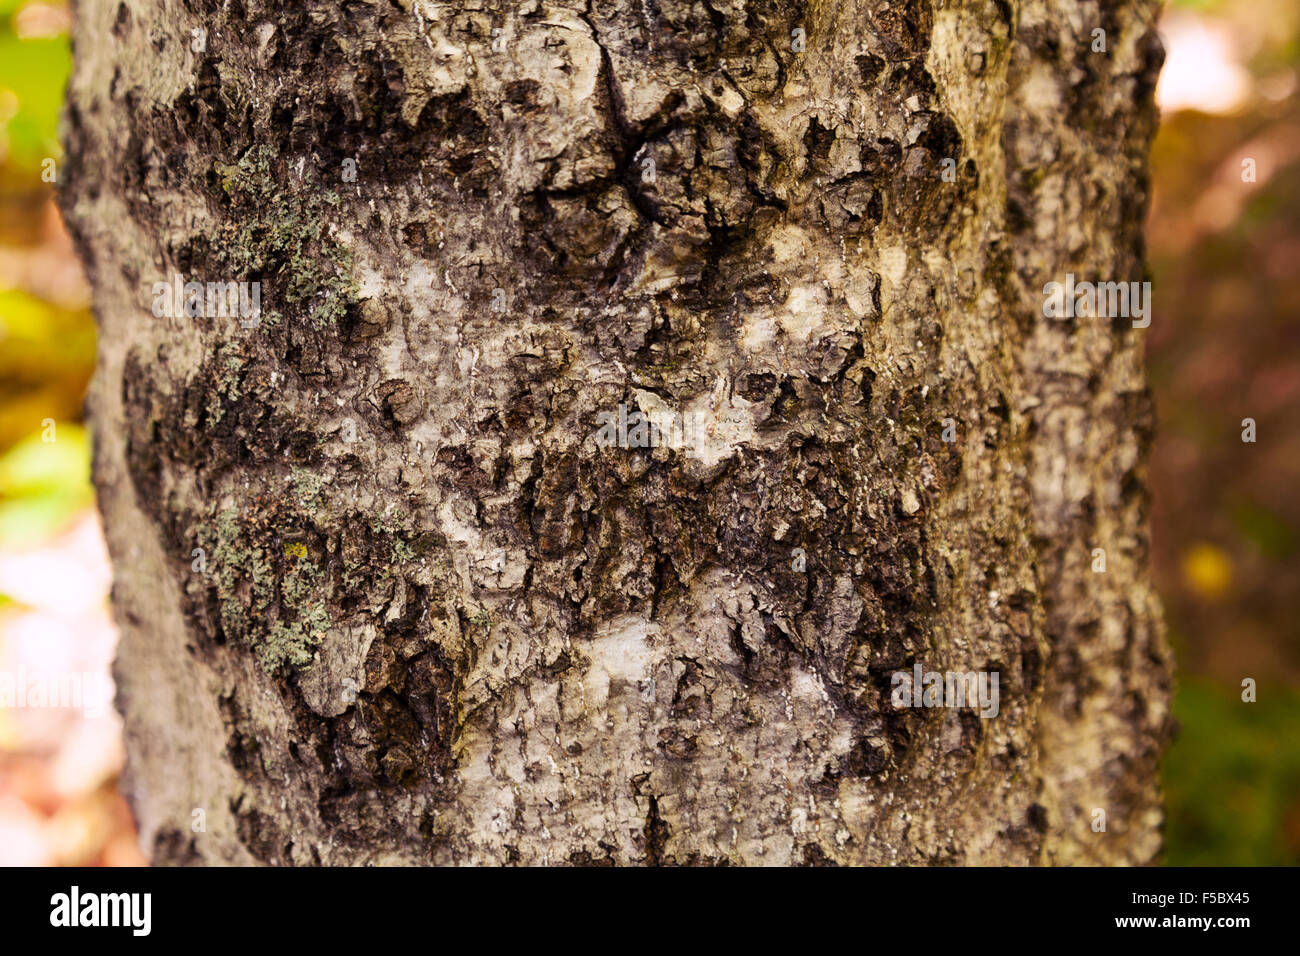 A beech tree showing signs of Beech Bark Disease or Beech Bark Fungus, New Hampshire USA Stock Photo